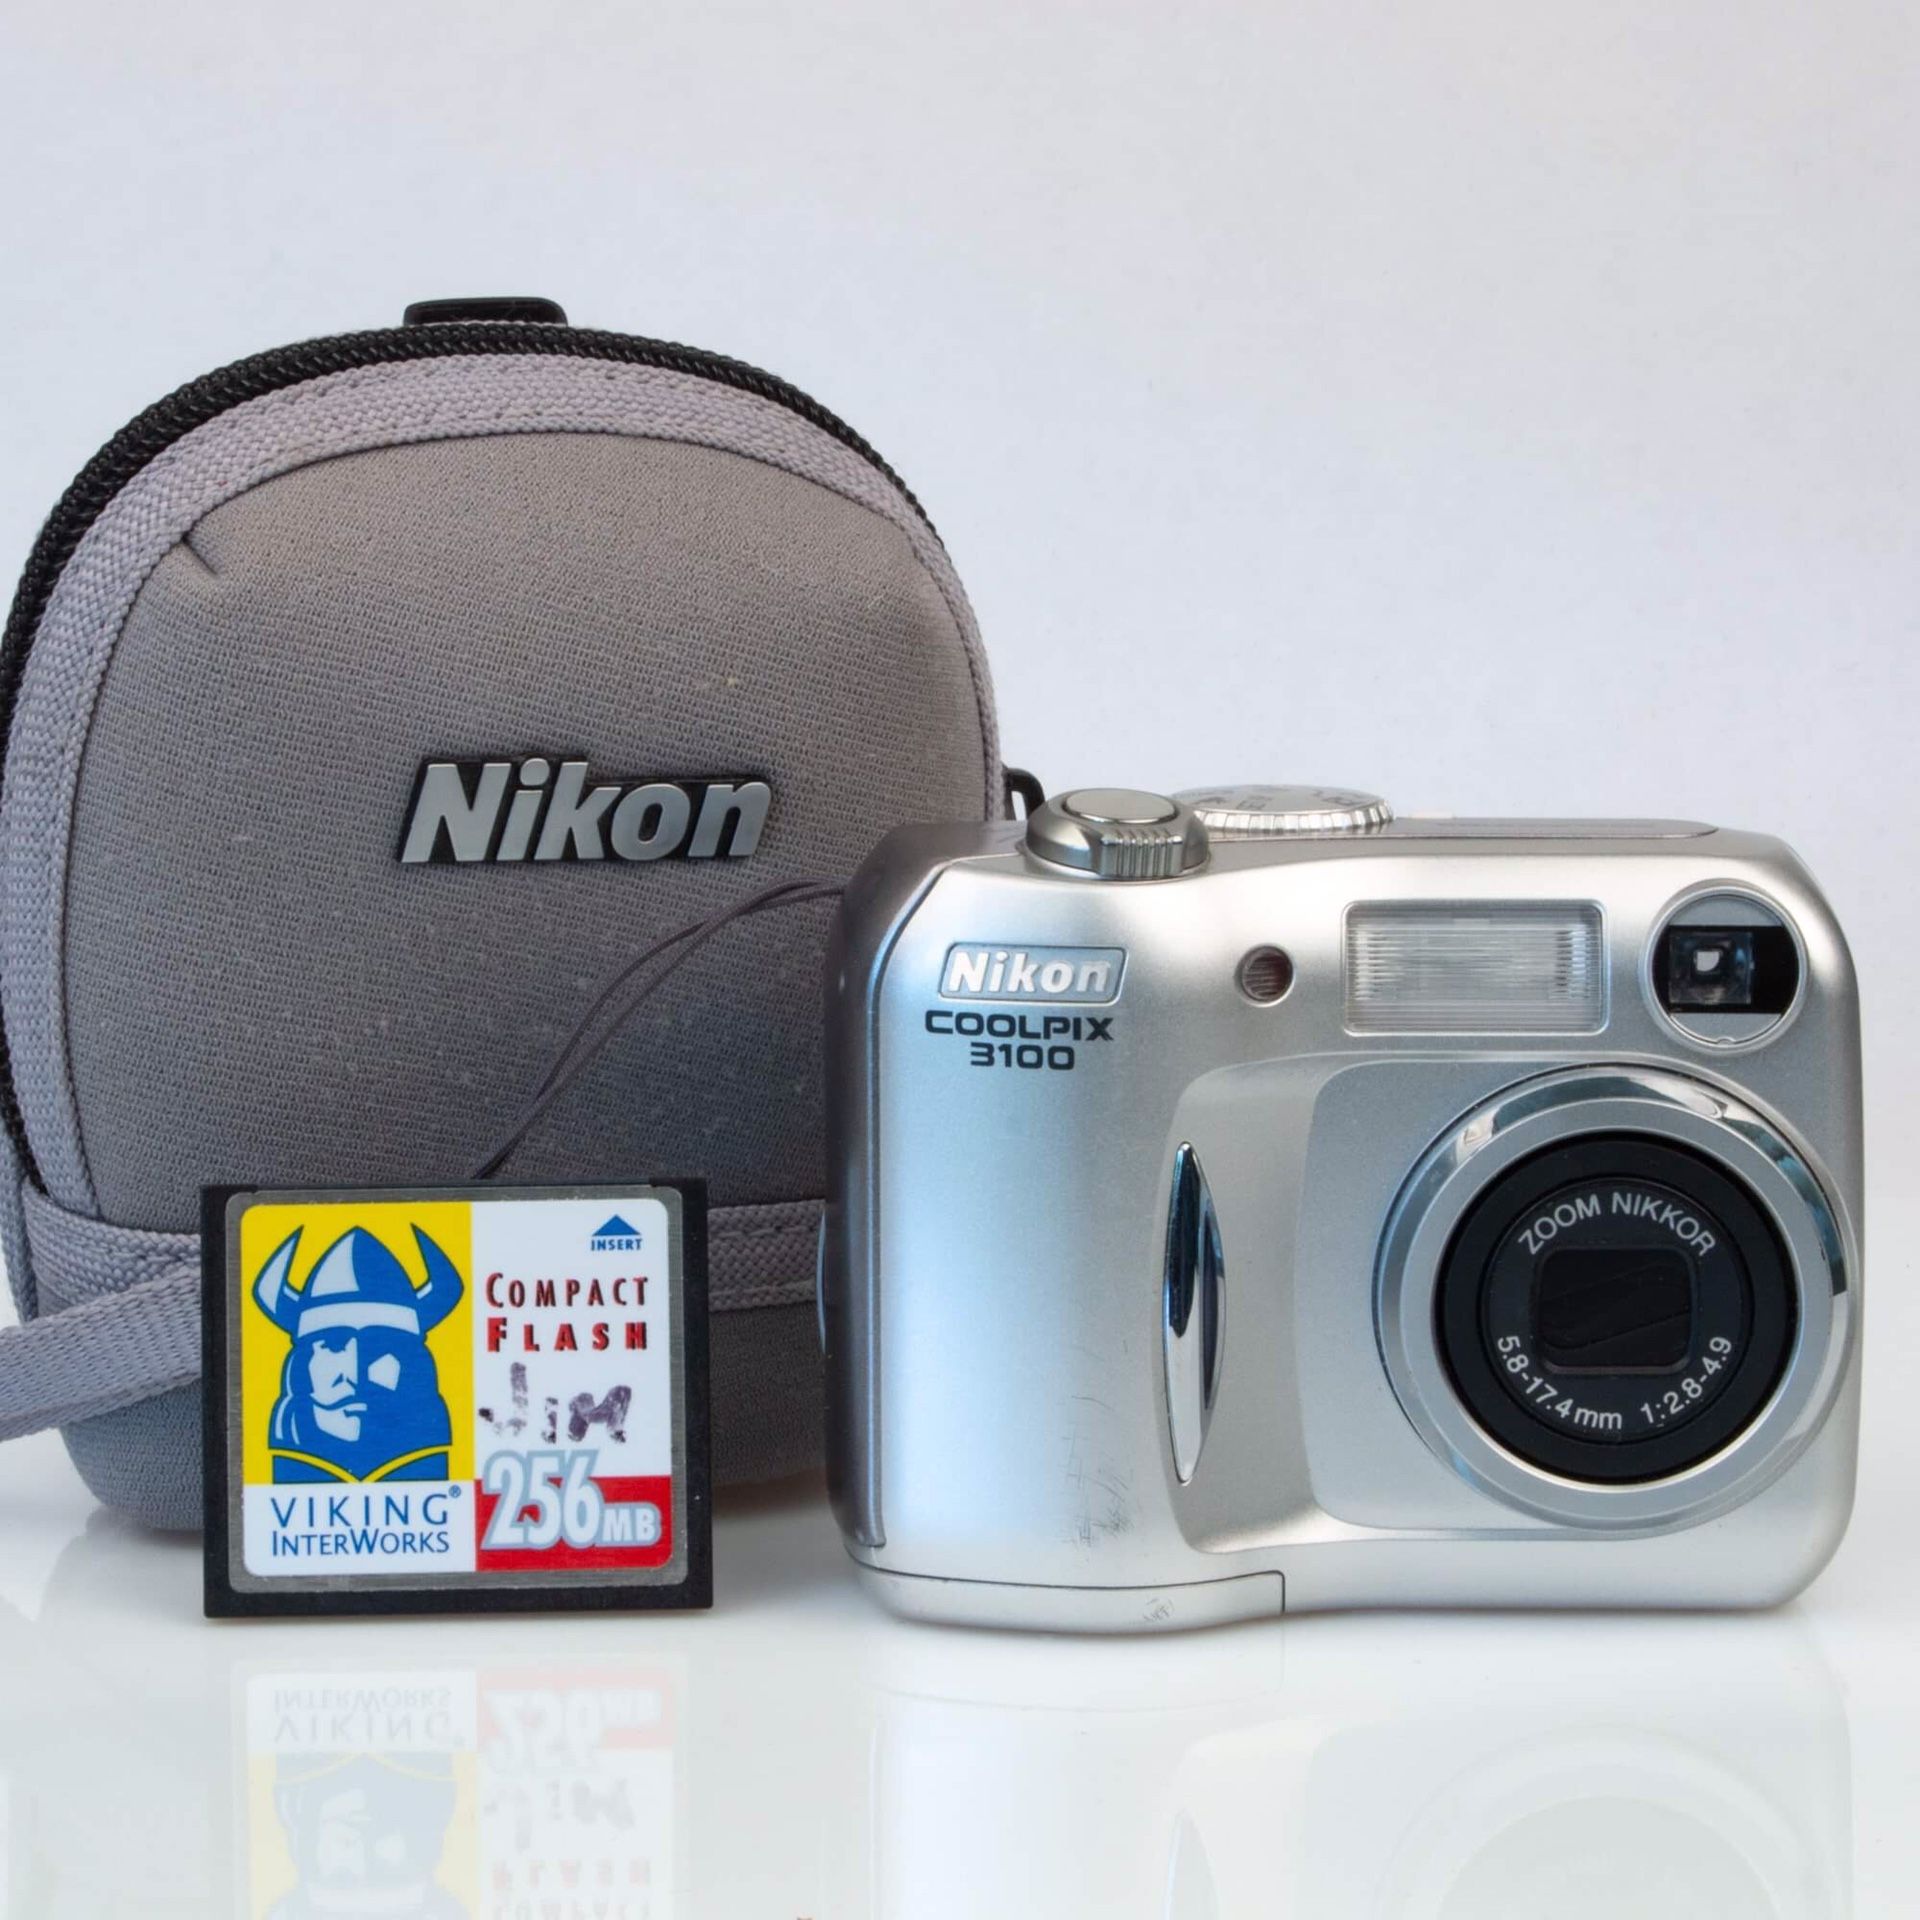 Nikon Coolpix 3100 camera